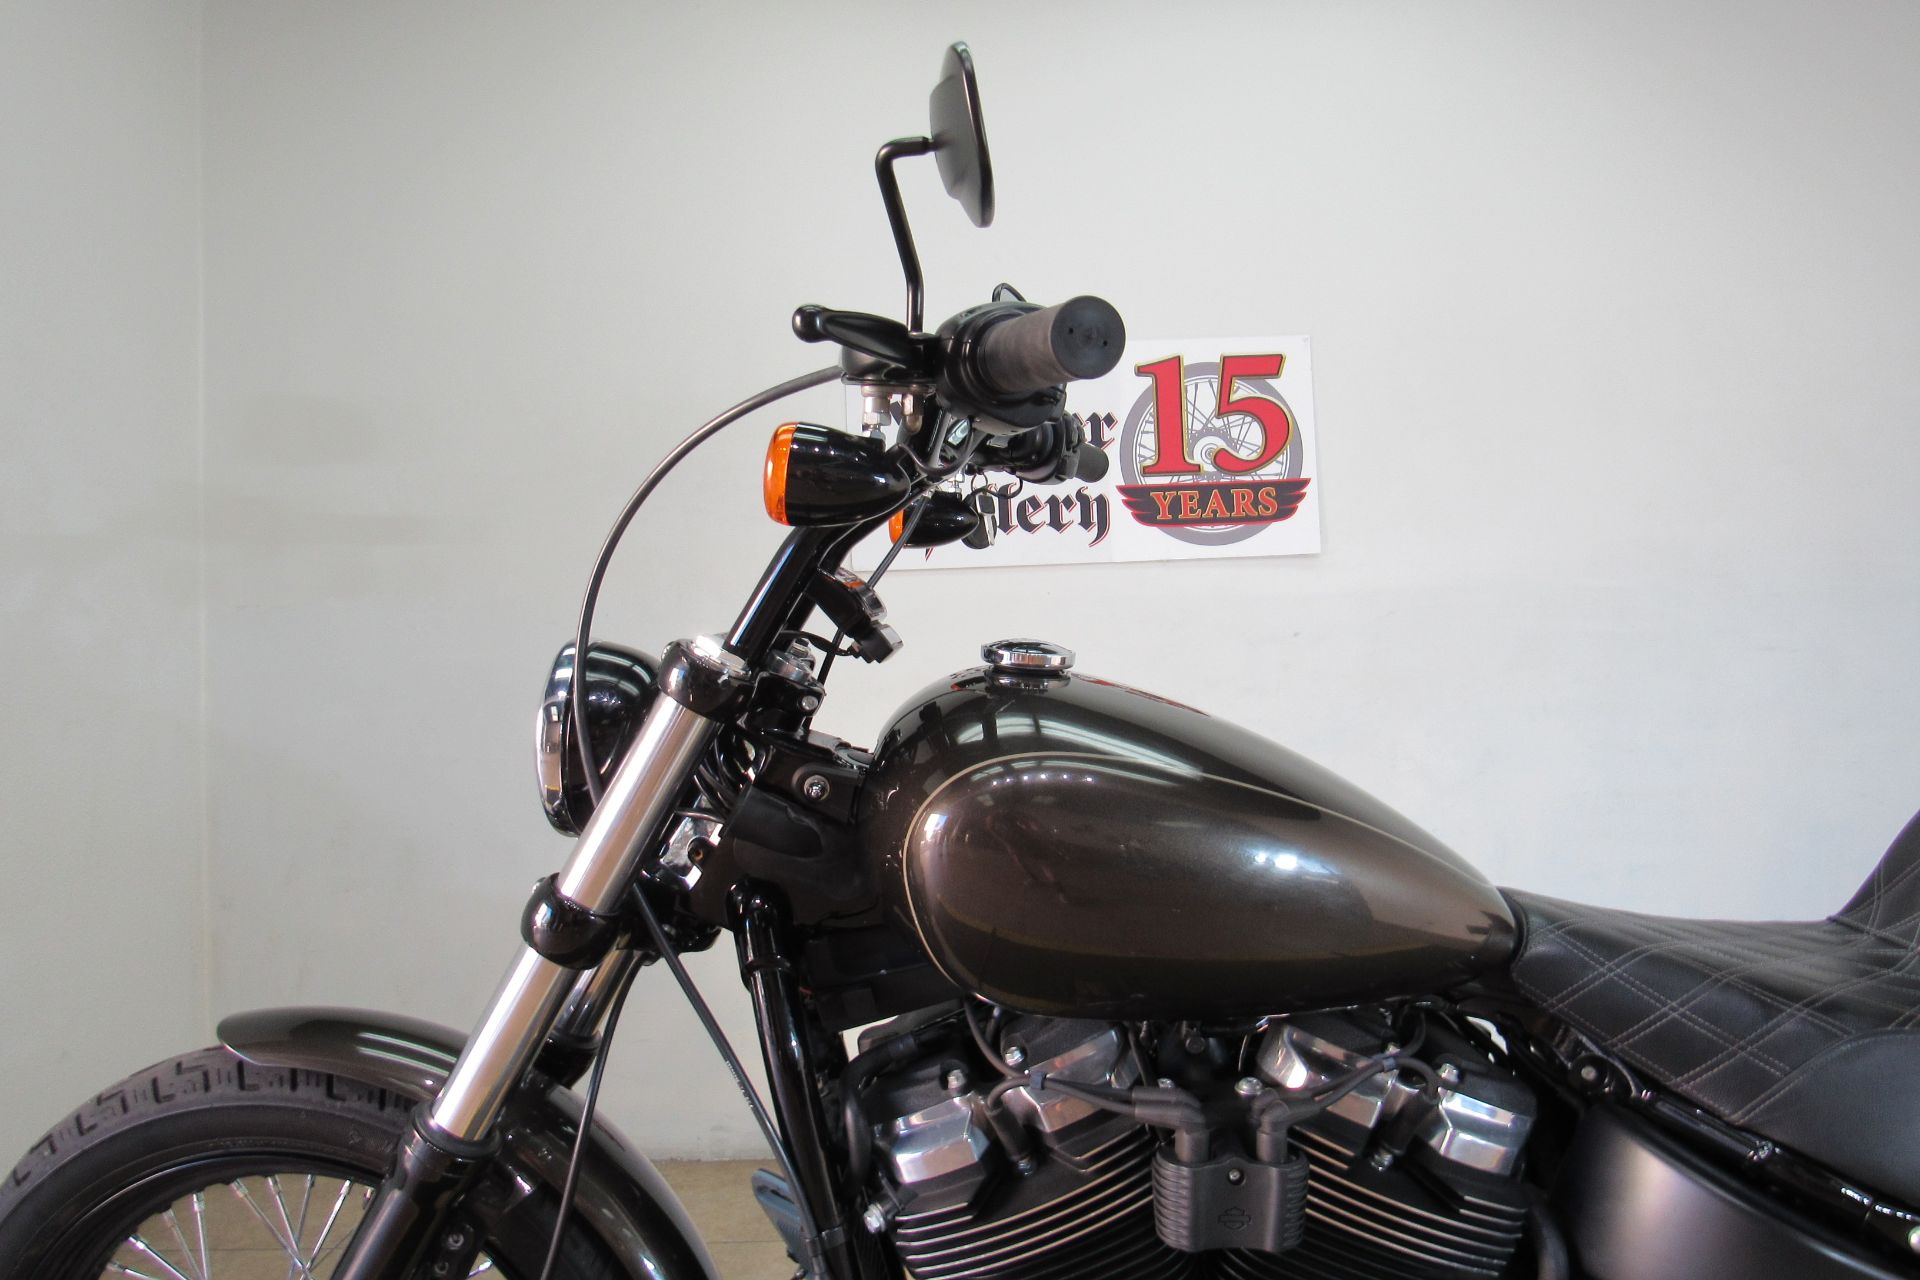 2020 Harley-Davidson Street Bob® in Temecula, California - Photo 4